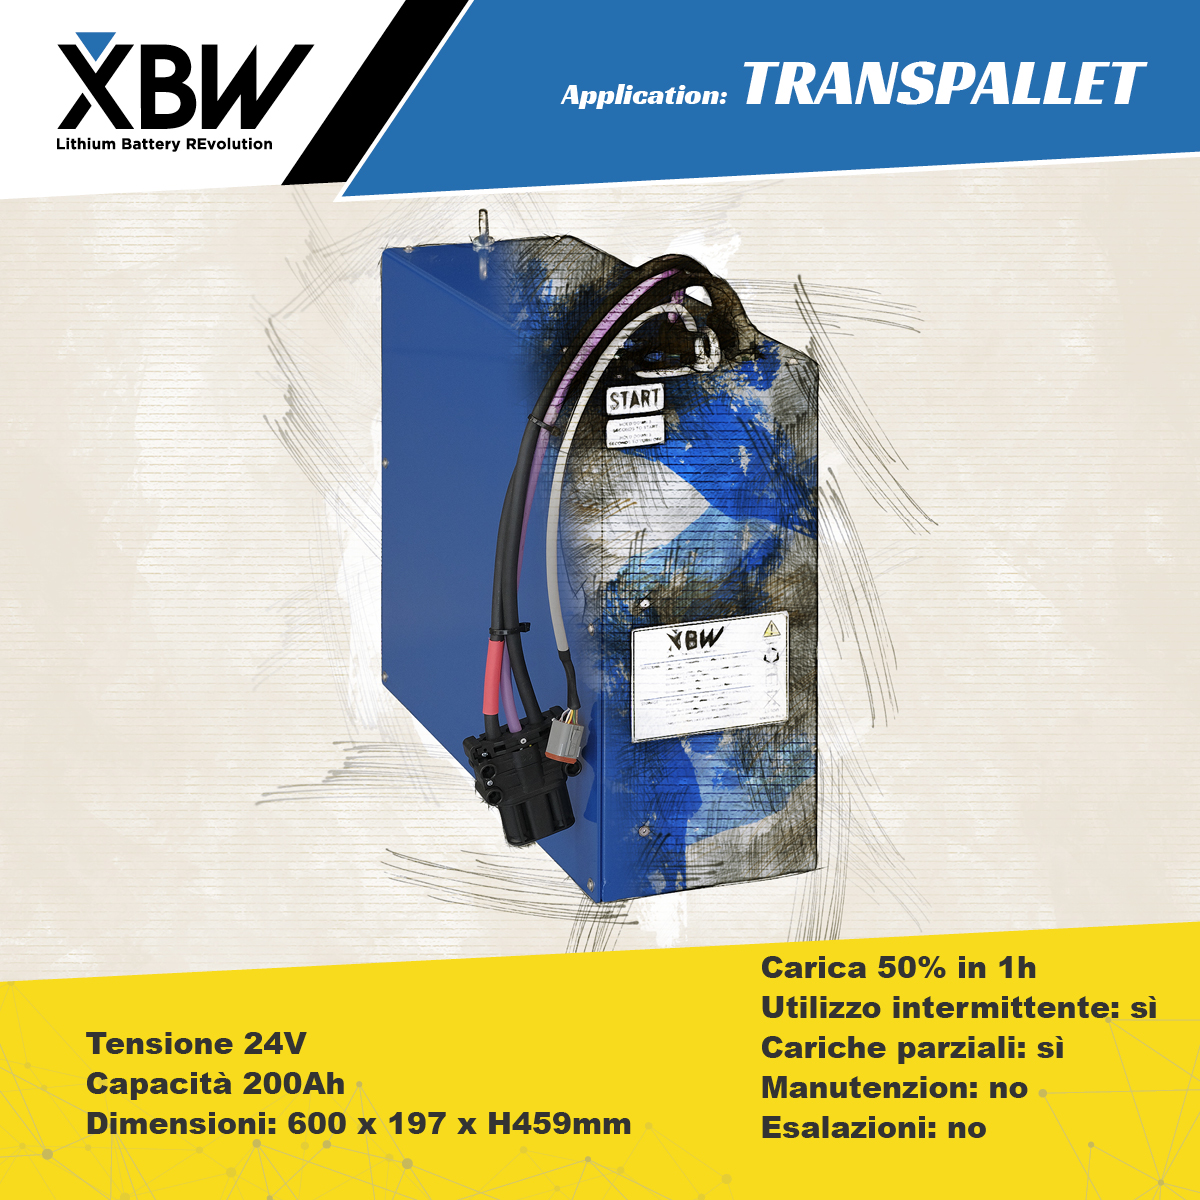 Applicazione Transpallet XBW